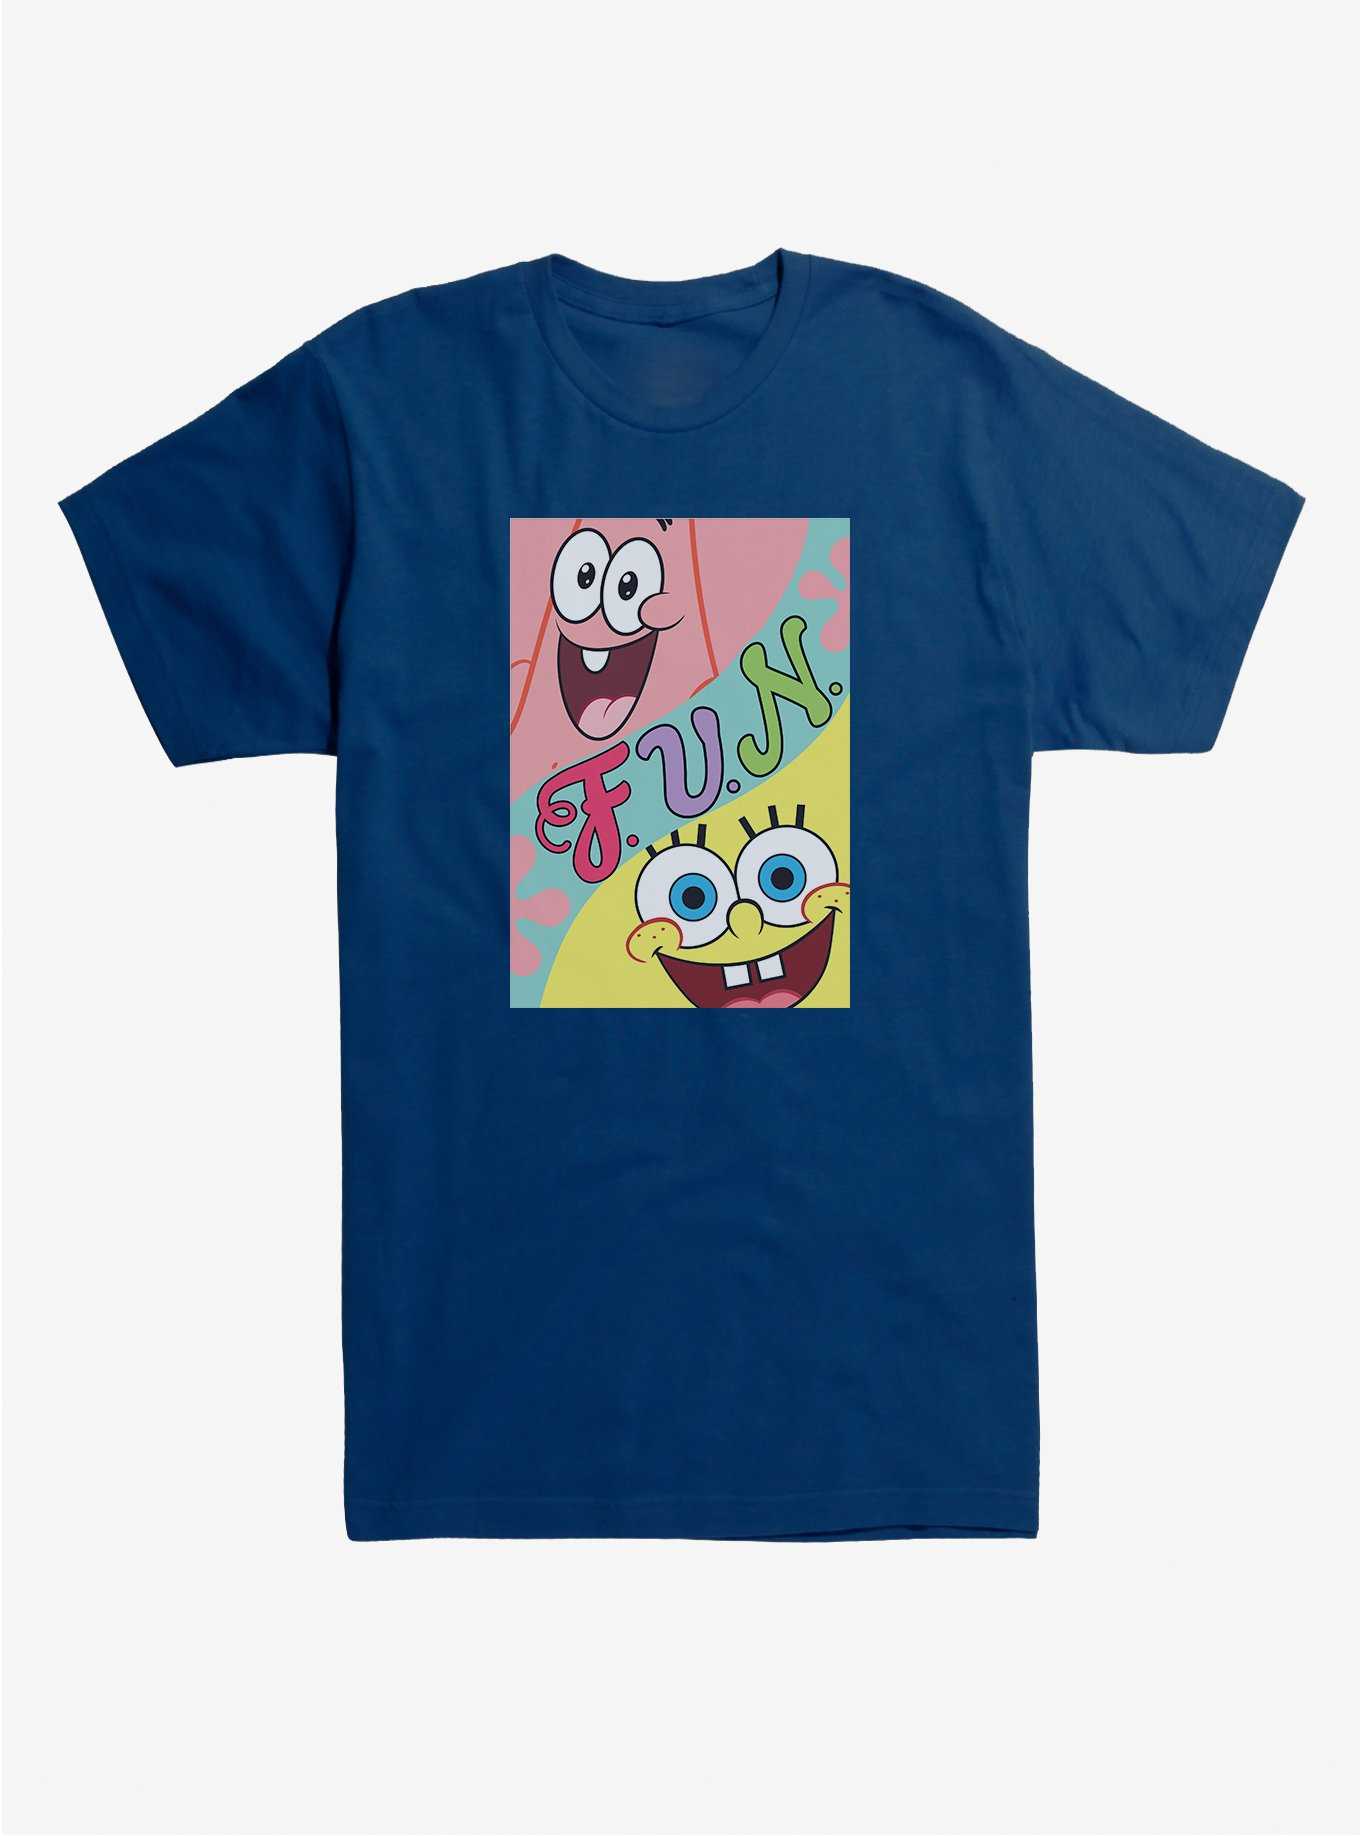 SpongeBob SquarePants Spongebob & Patrick Fun T-Shirt, , hi-res